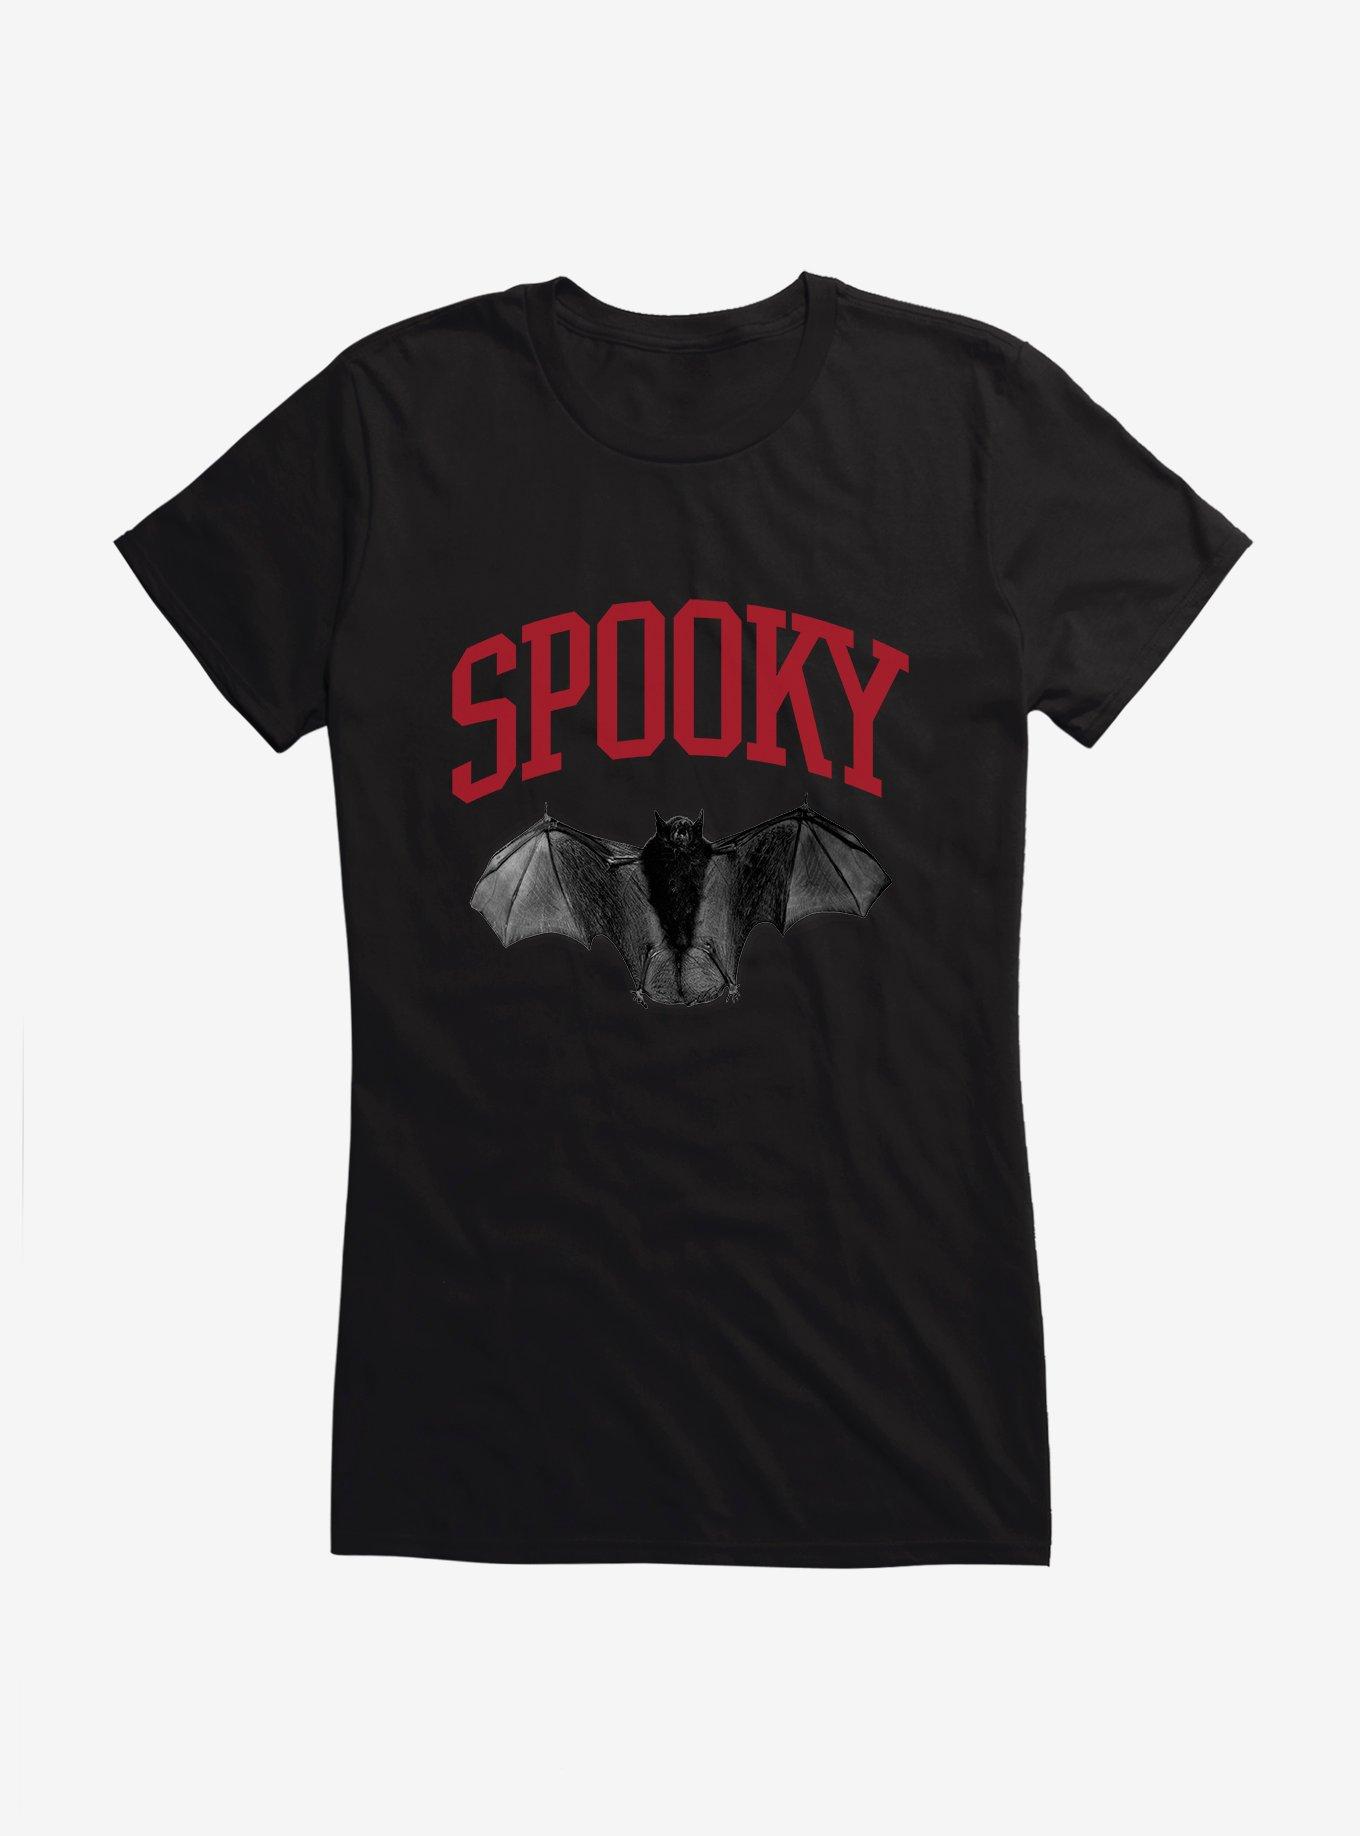 Hot Topic Spooky Bat Girls T-Shirt